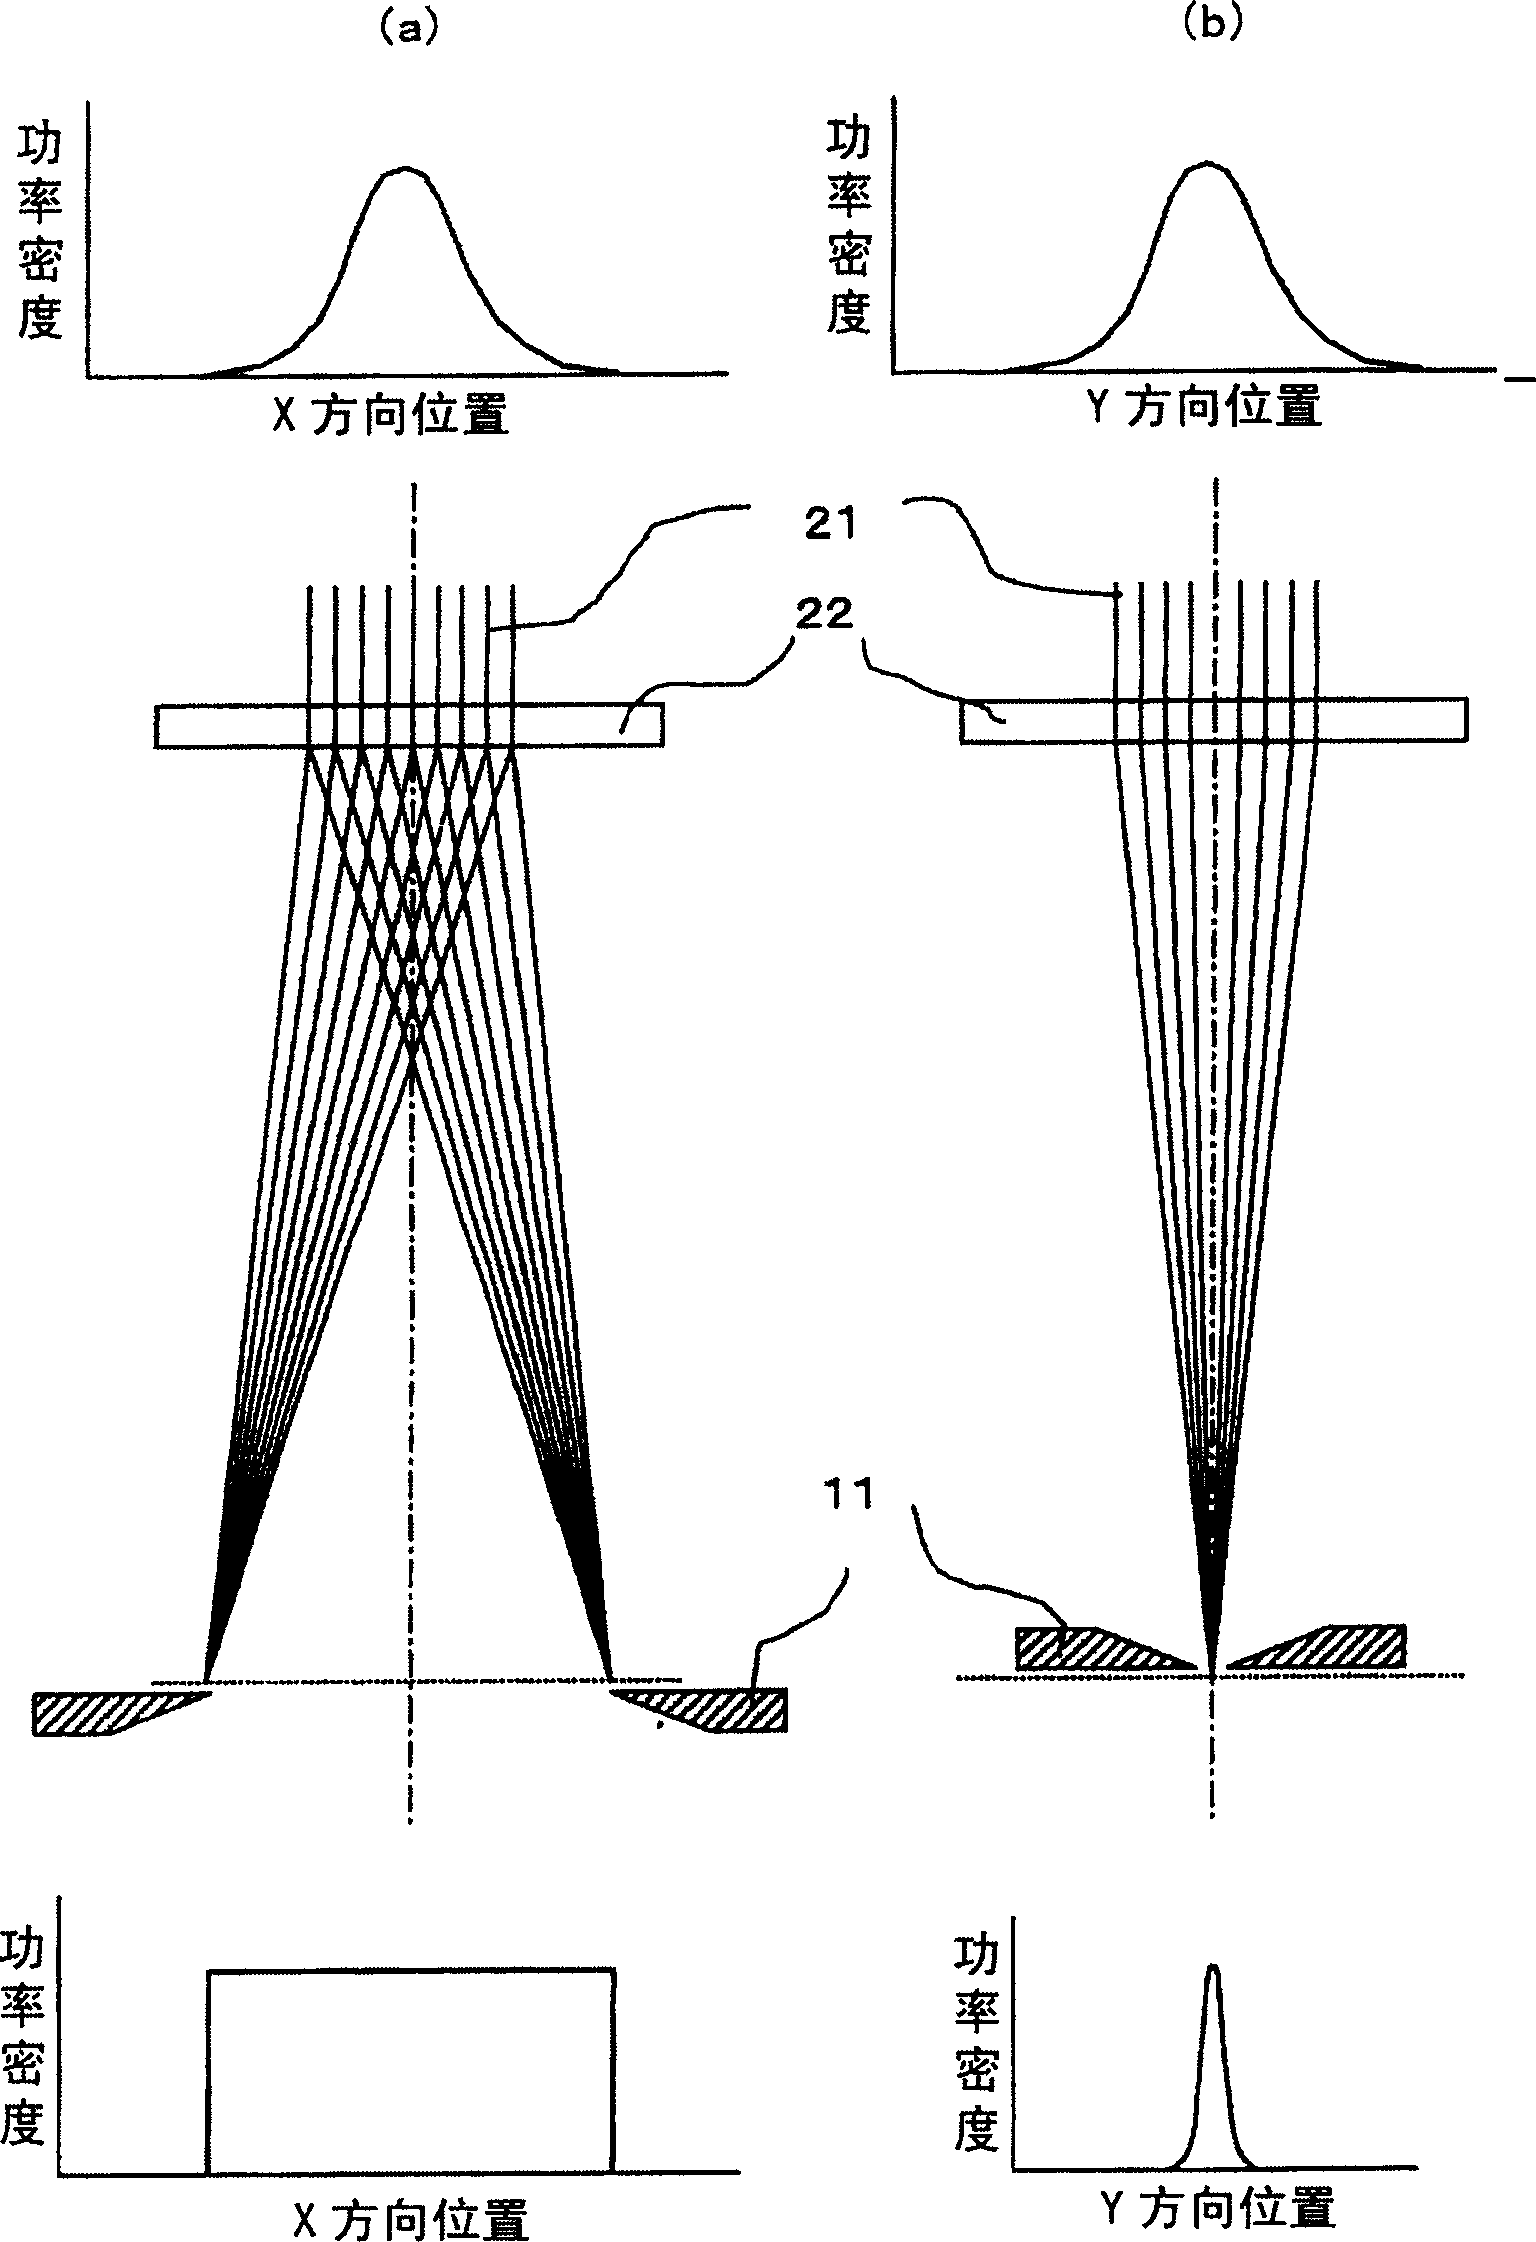 Laser annealing apparatus and annealing method